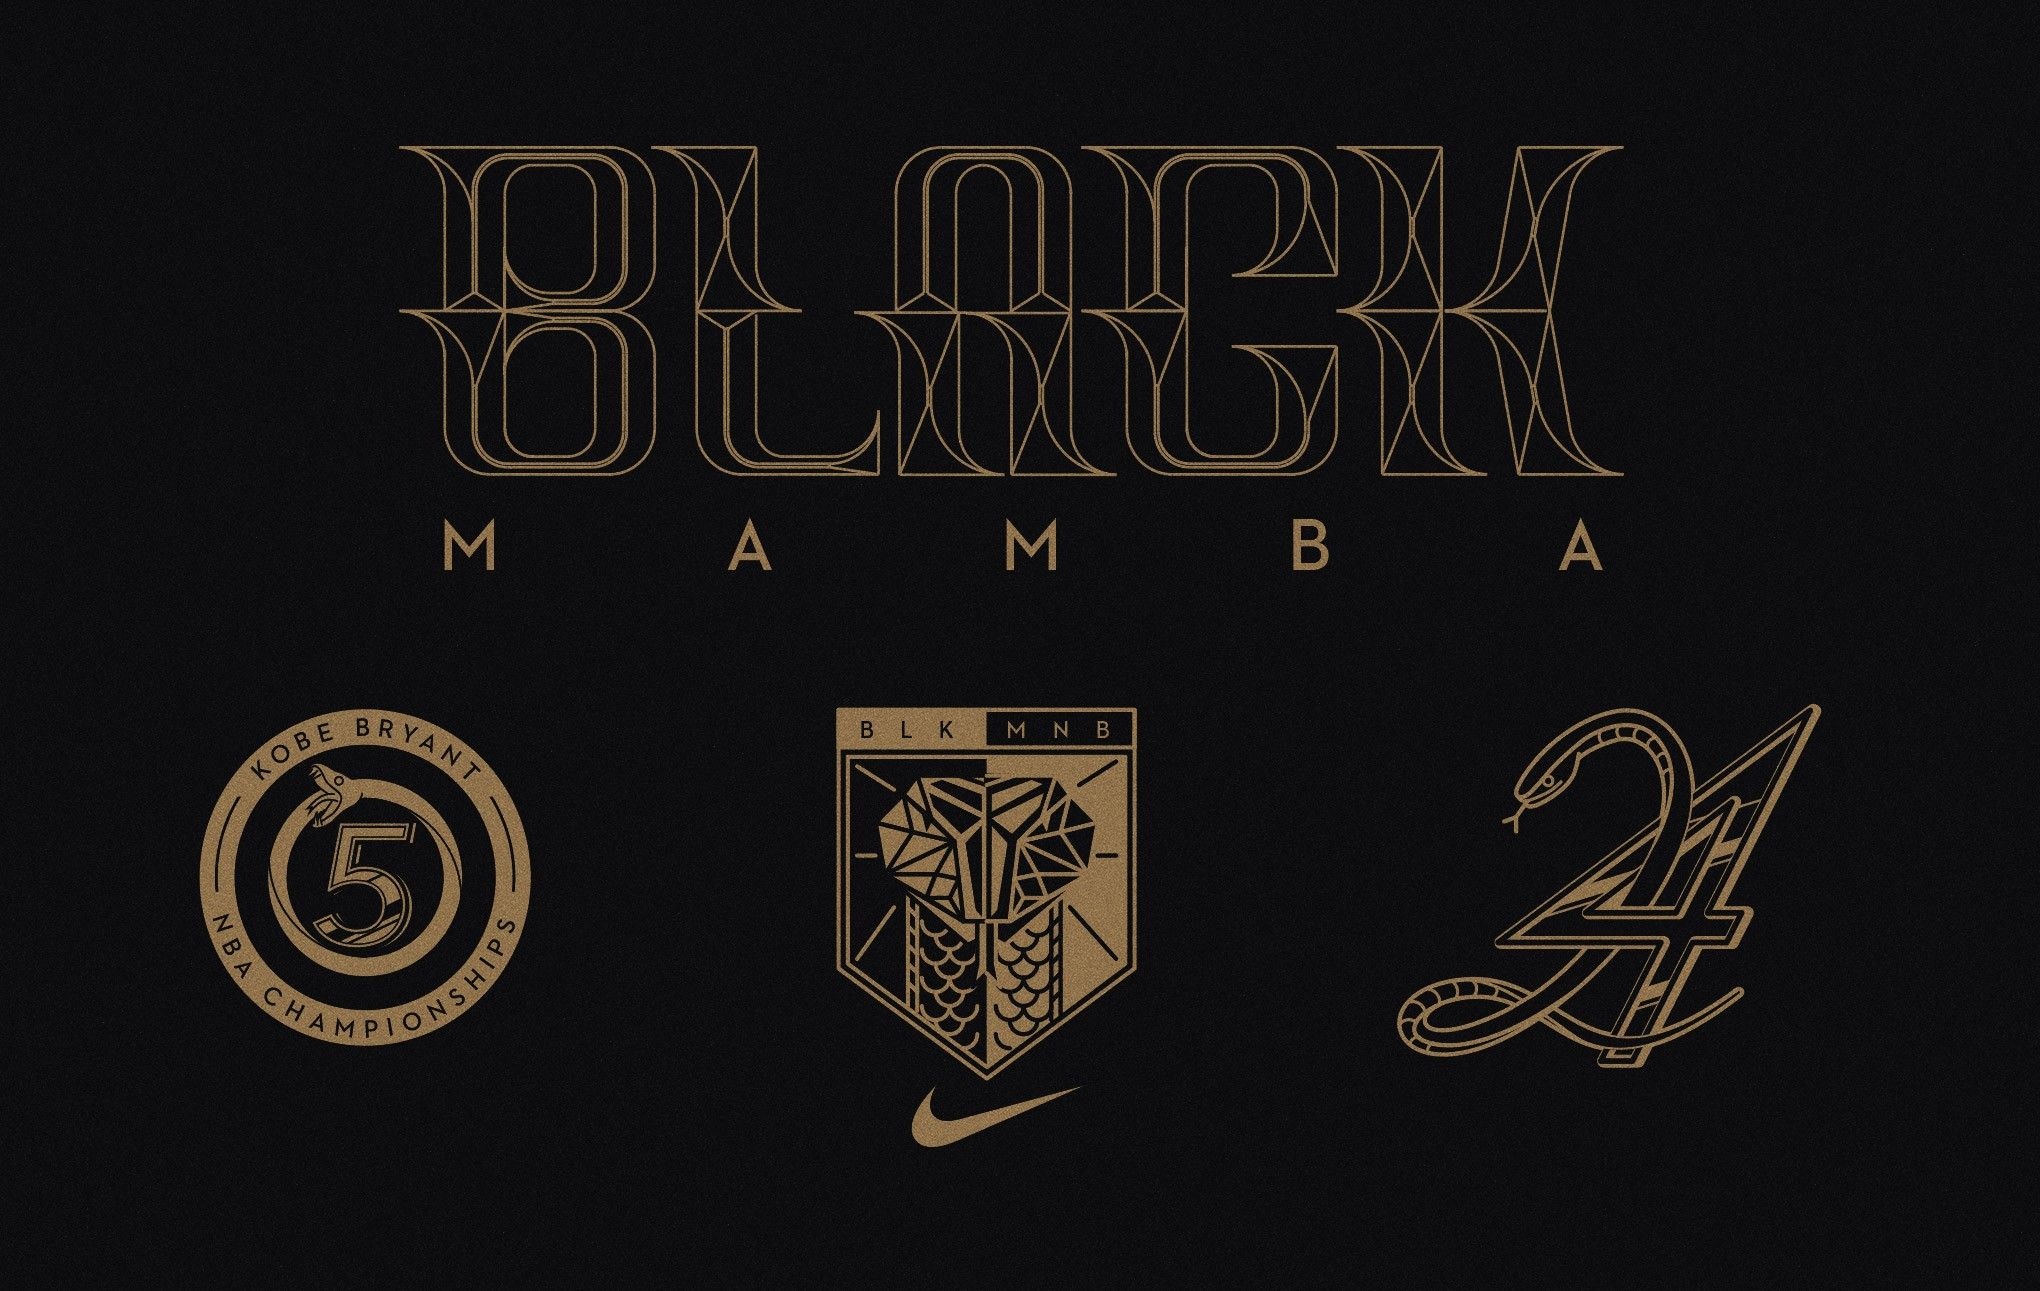 kobe bryant black mamba logo wallpaper